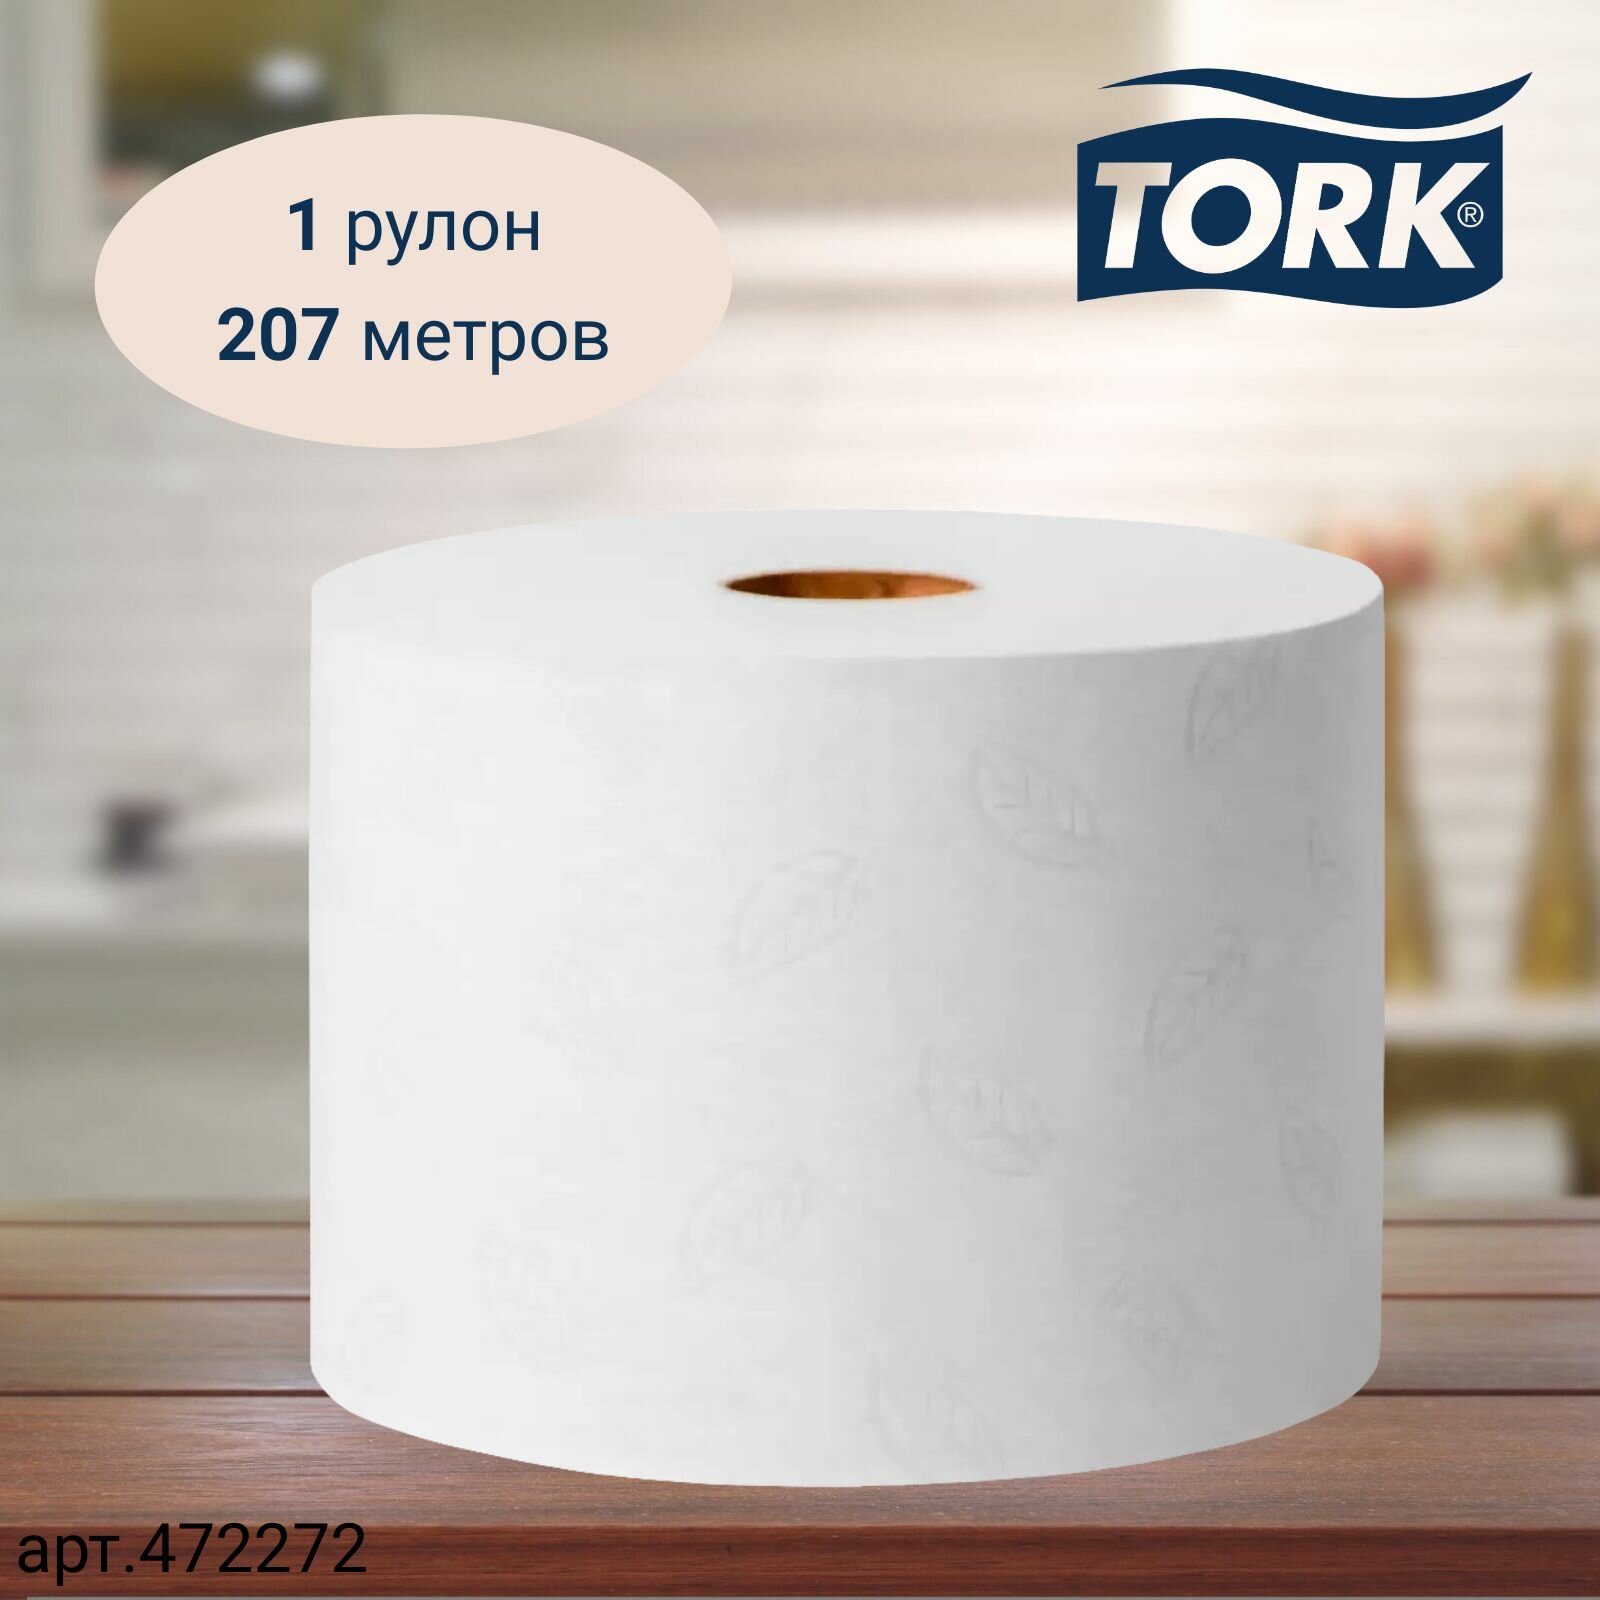 Туалетная бумага Tork SmartOne Advanced, в рулонах, система T8, 207 м, 2 сл, 1217 листов, белая, 1 рулон (арт: 472272)